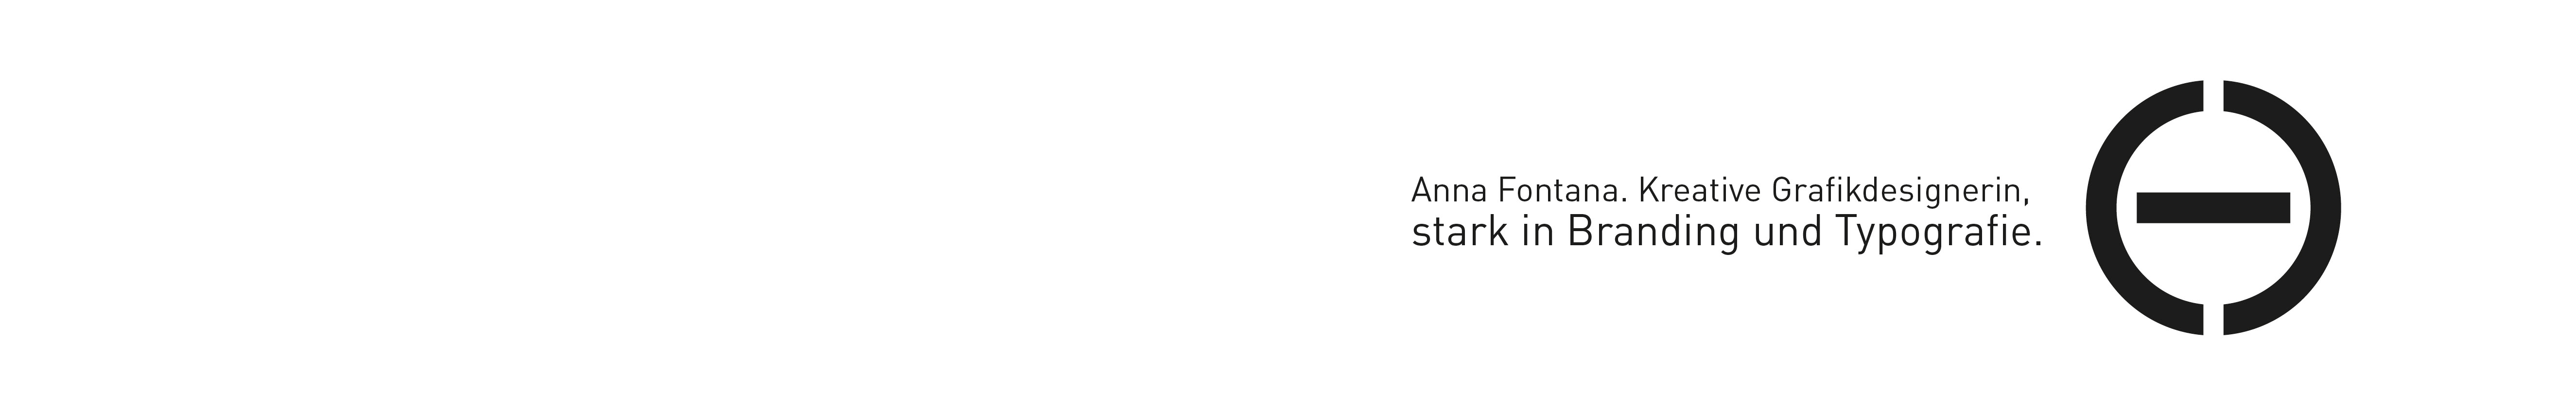 Anna Fontana のプロファイルバナー